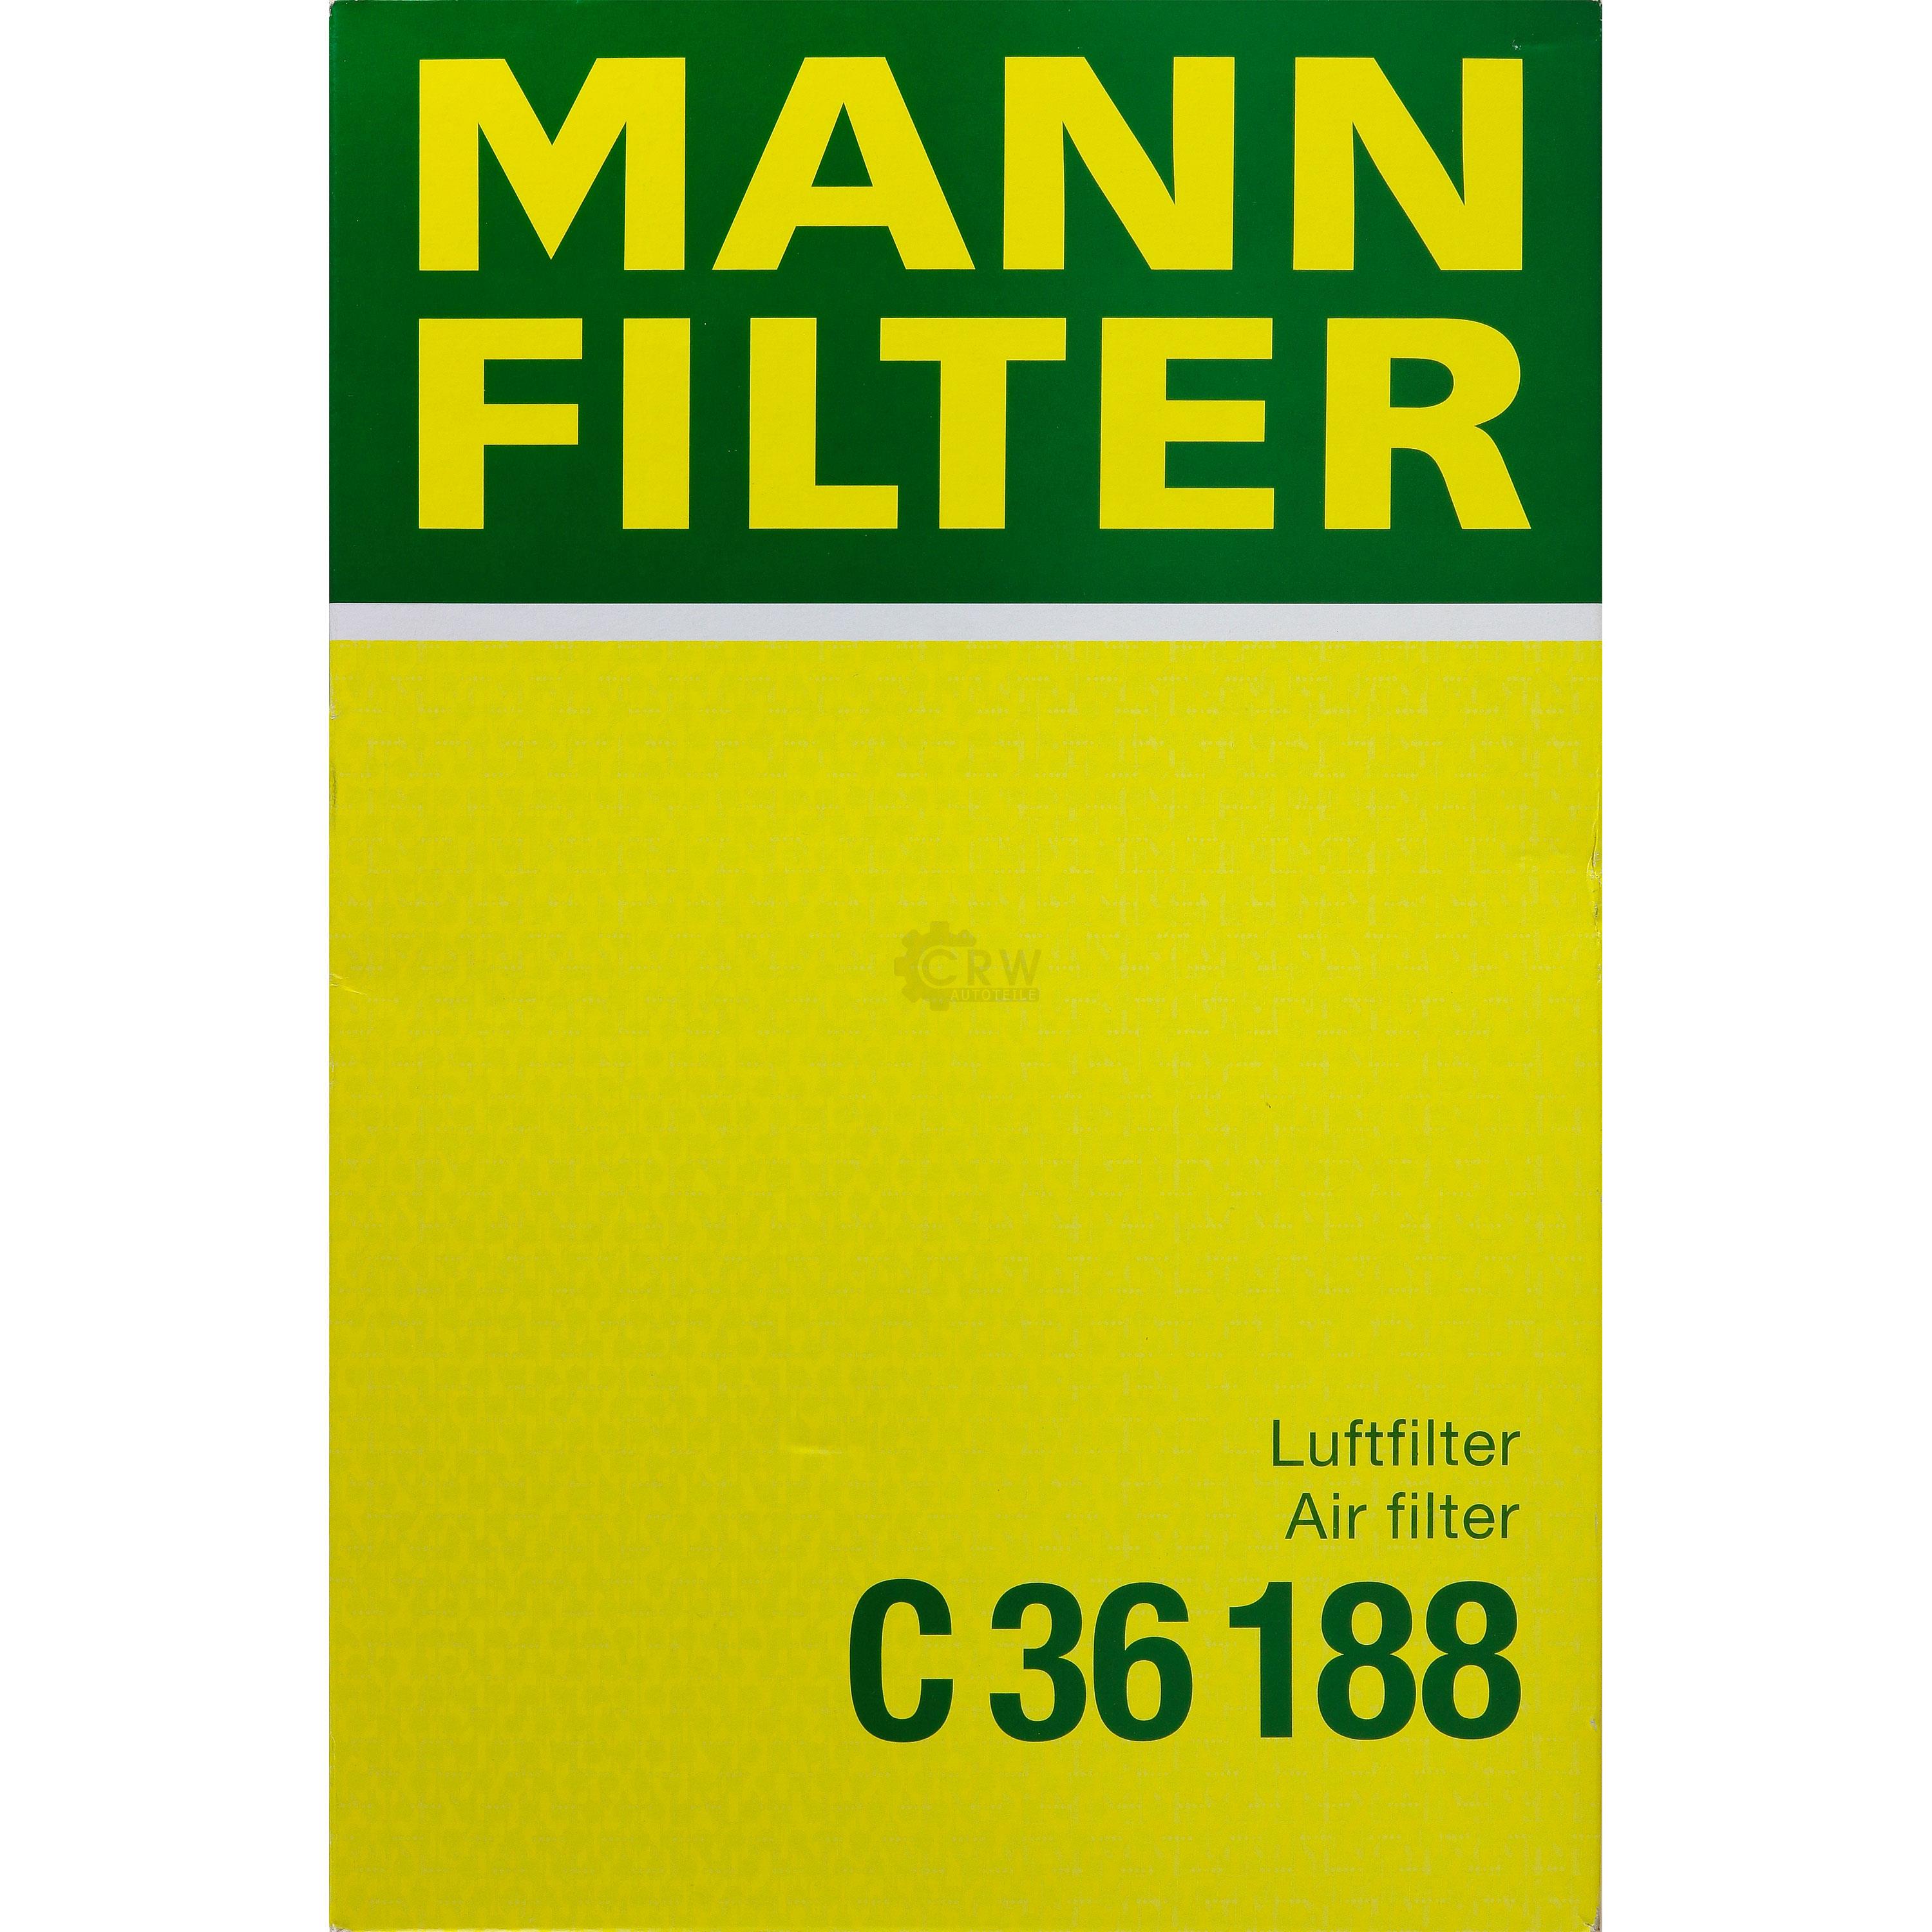 MANN-FILTER Luftfilter für VW Golf V 1K1 3.2 R32 4motion Passat CC 357 3.6 FSI